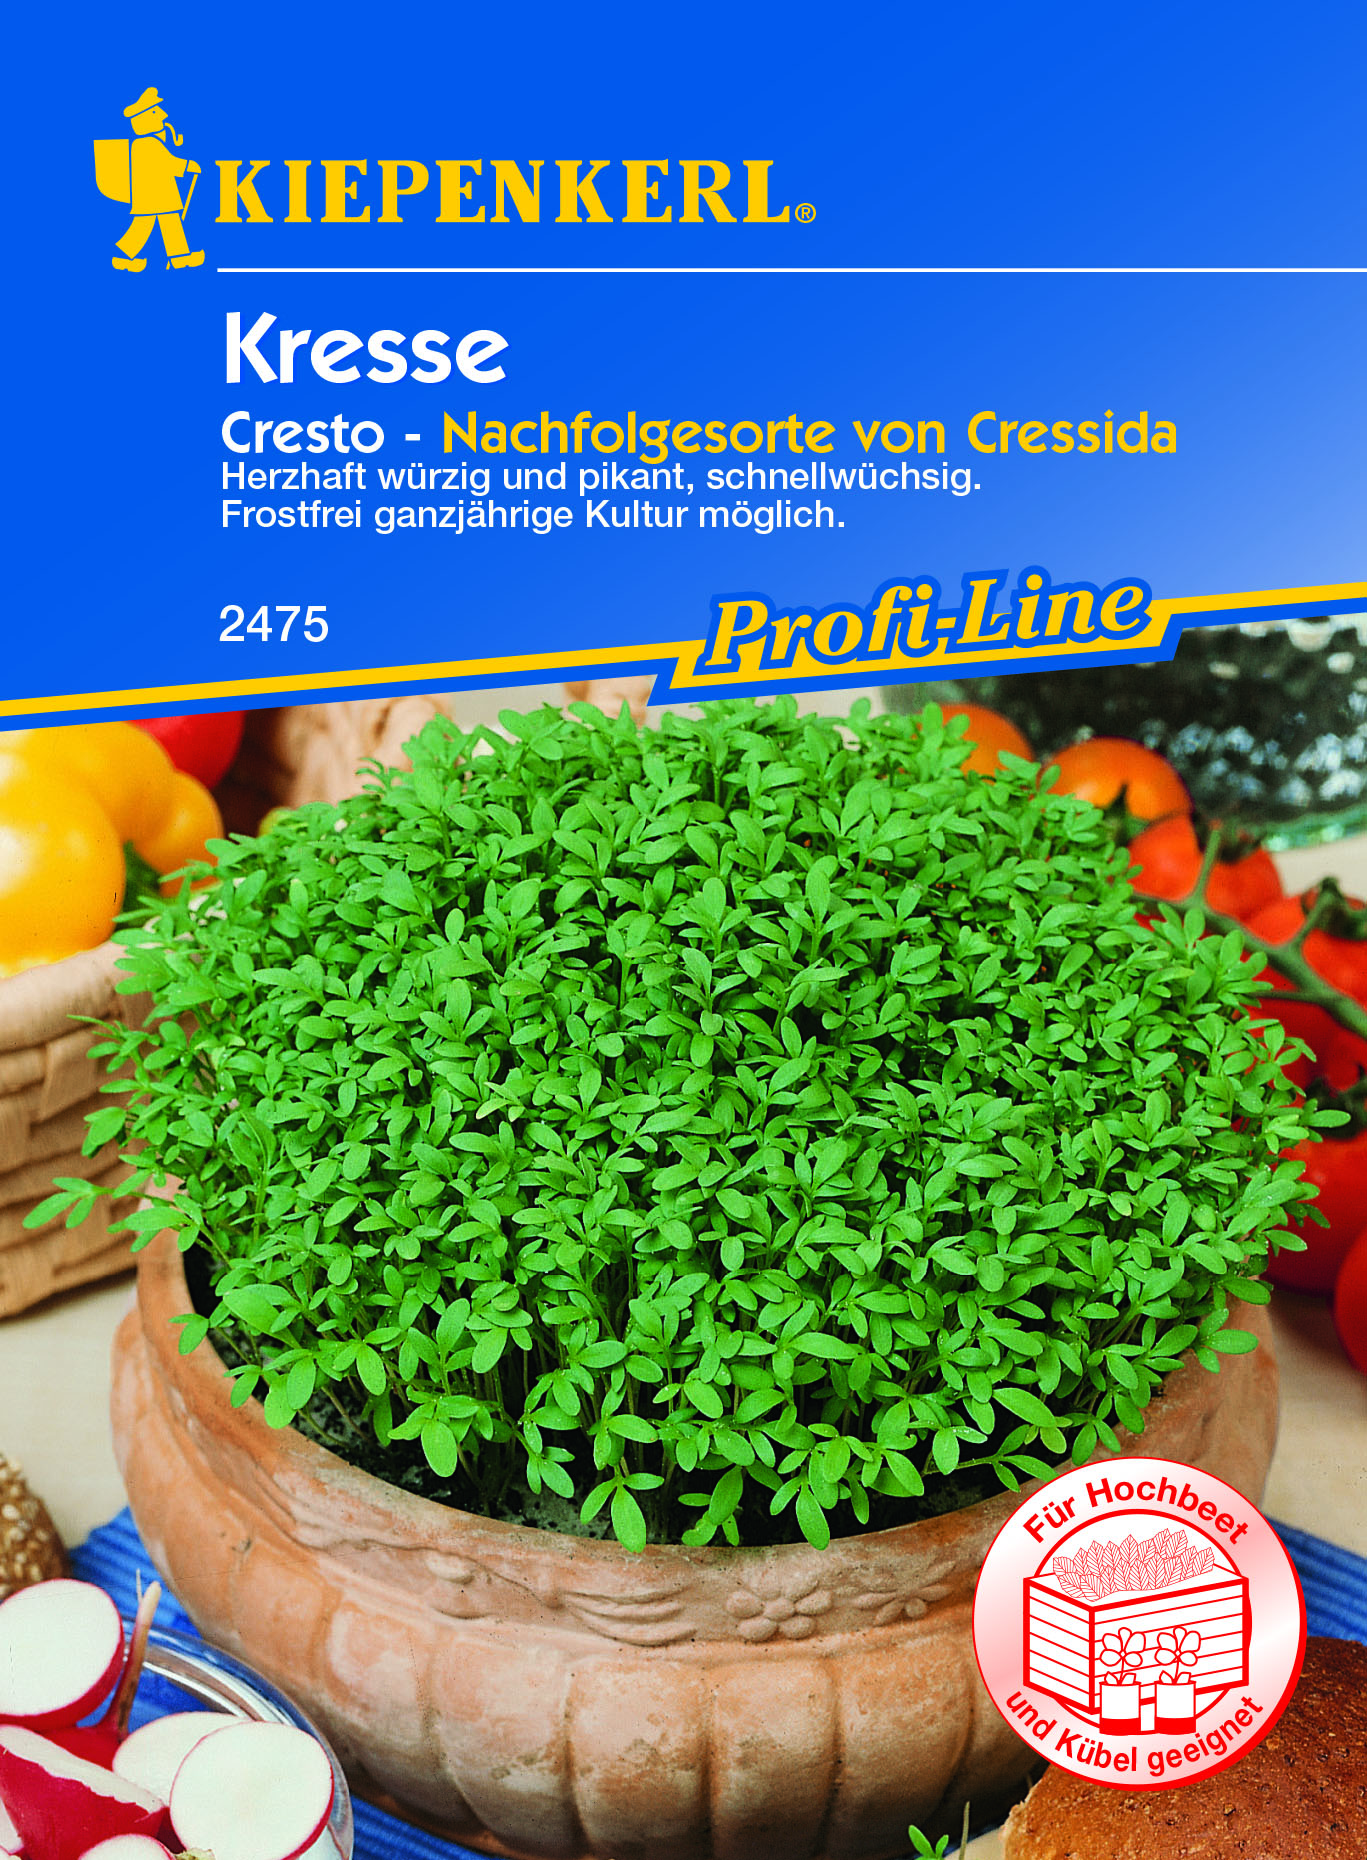 Kiepenkerl® Profi-Line Kresse Cresto